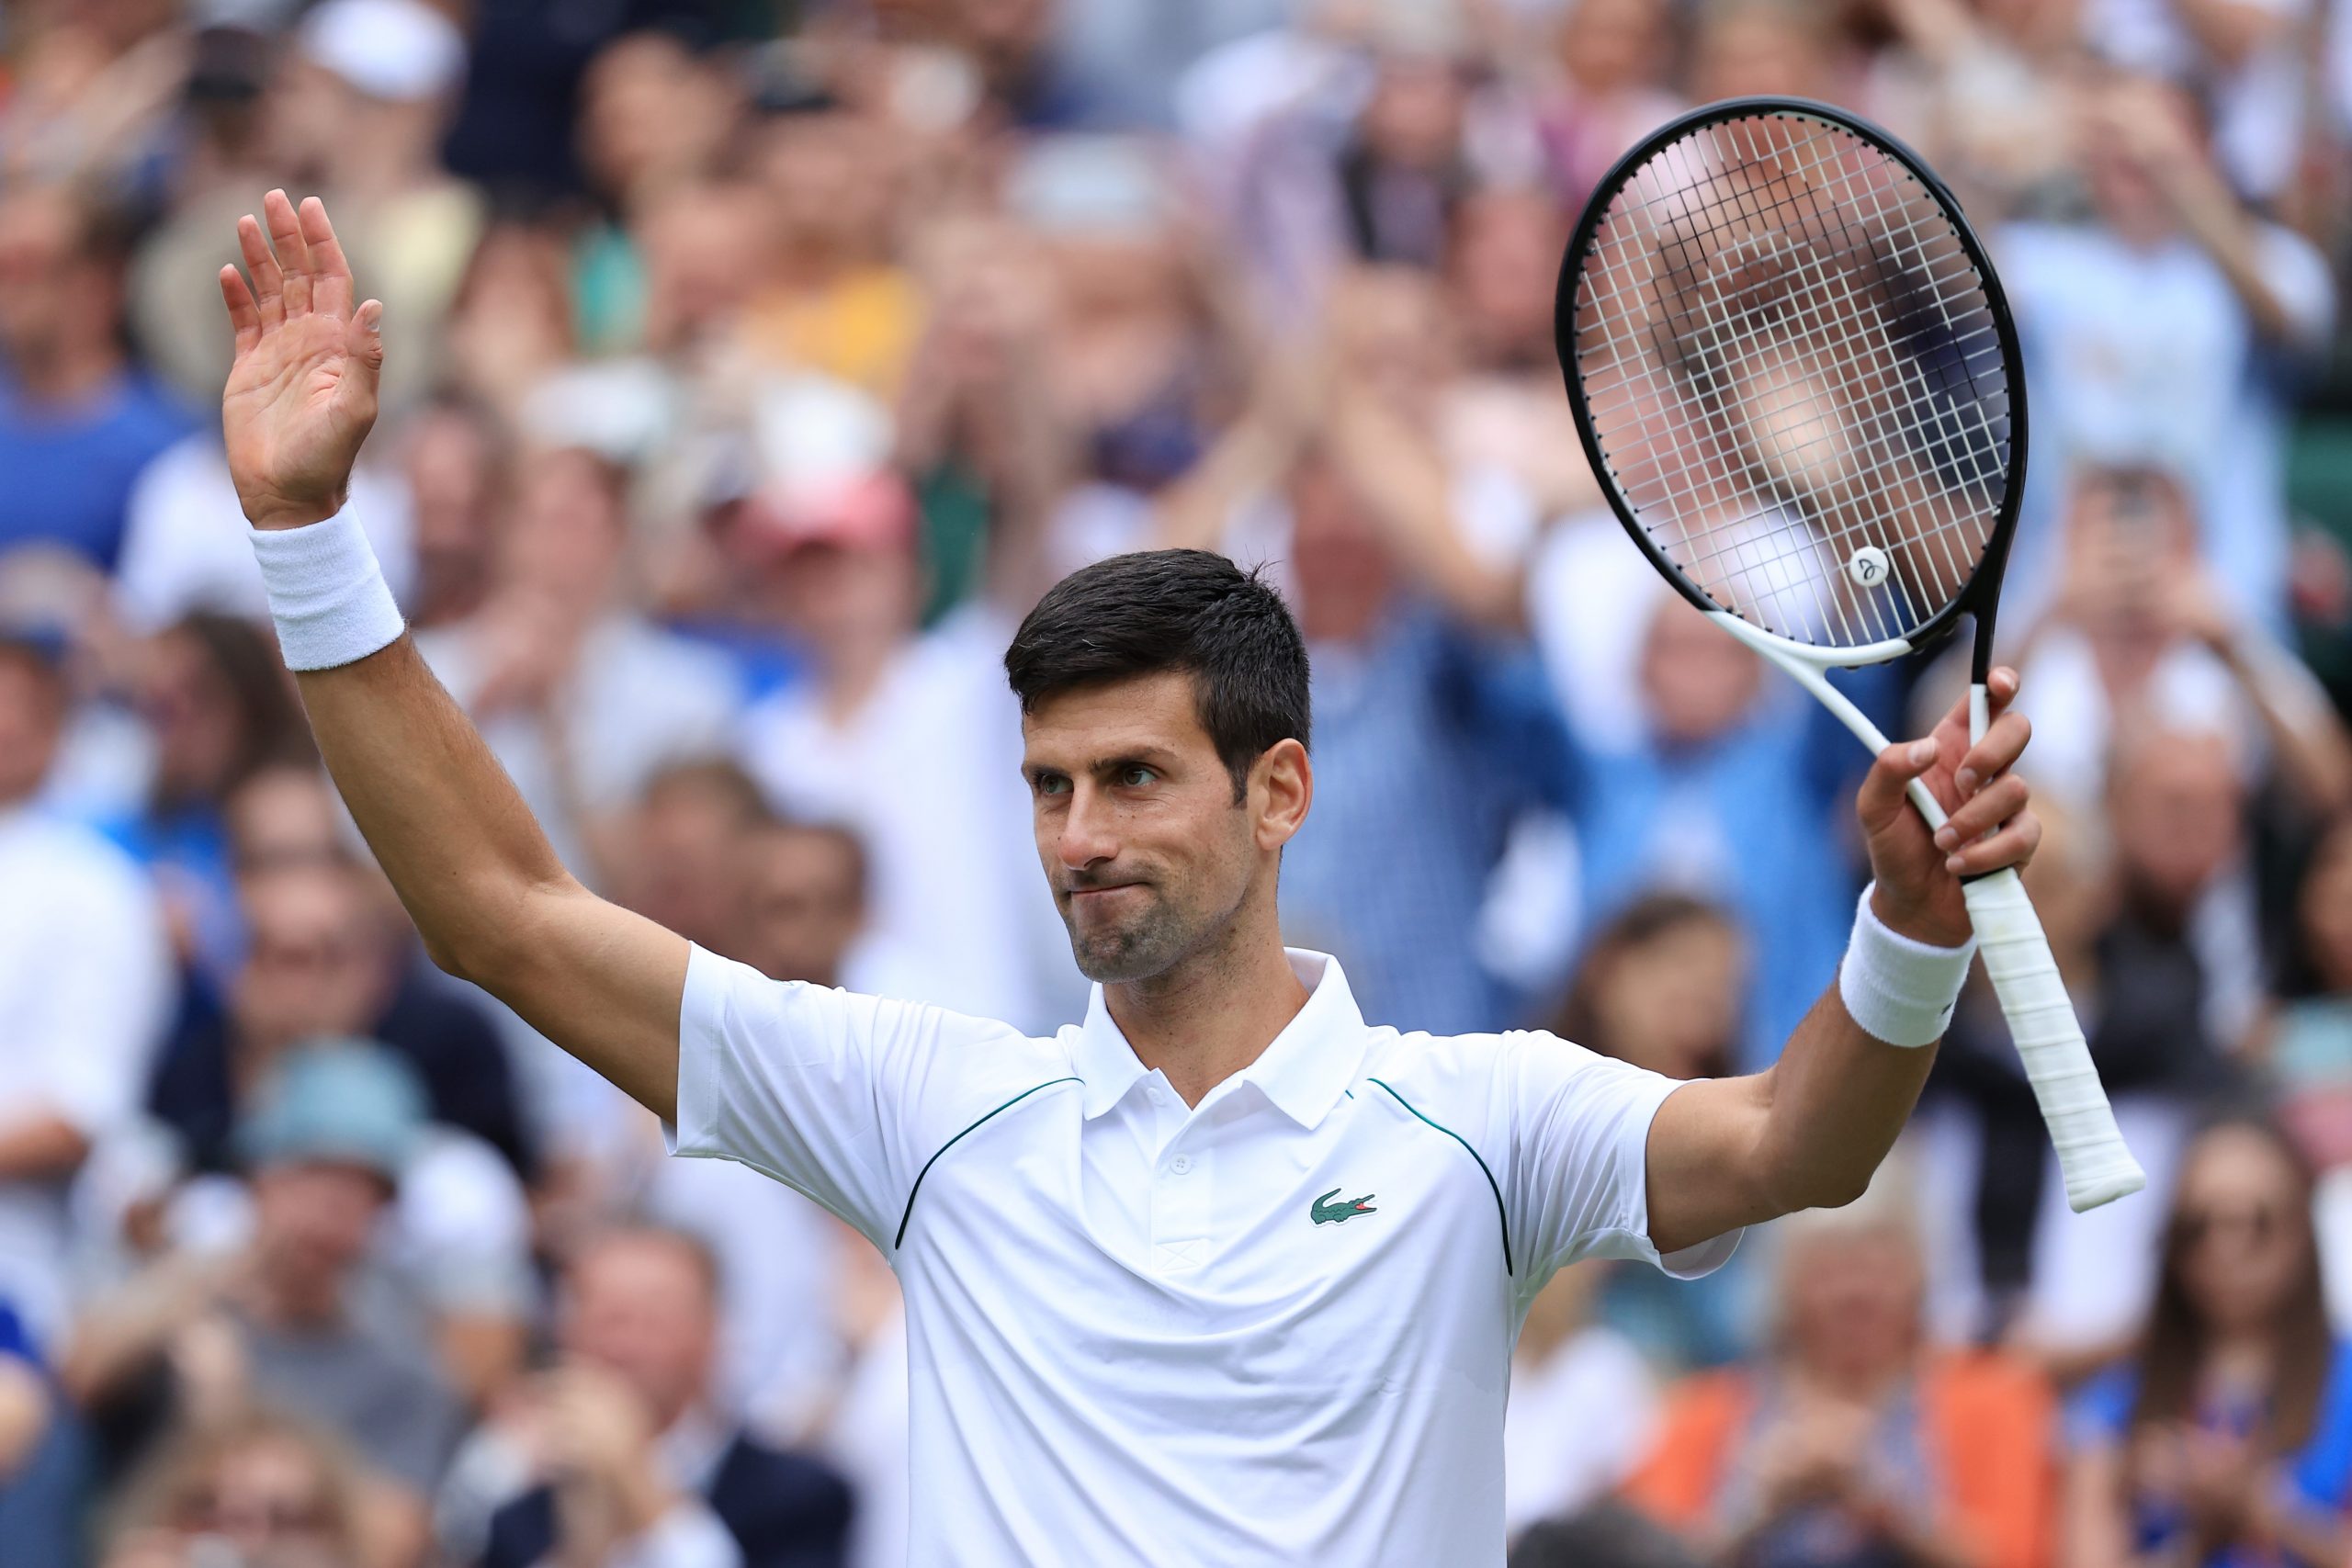 Novak Djokovic, who had a traumatic childhood, celebrates a victory over Miomir Kecmanovic at Wimbledon